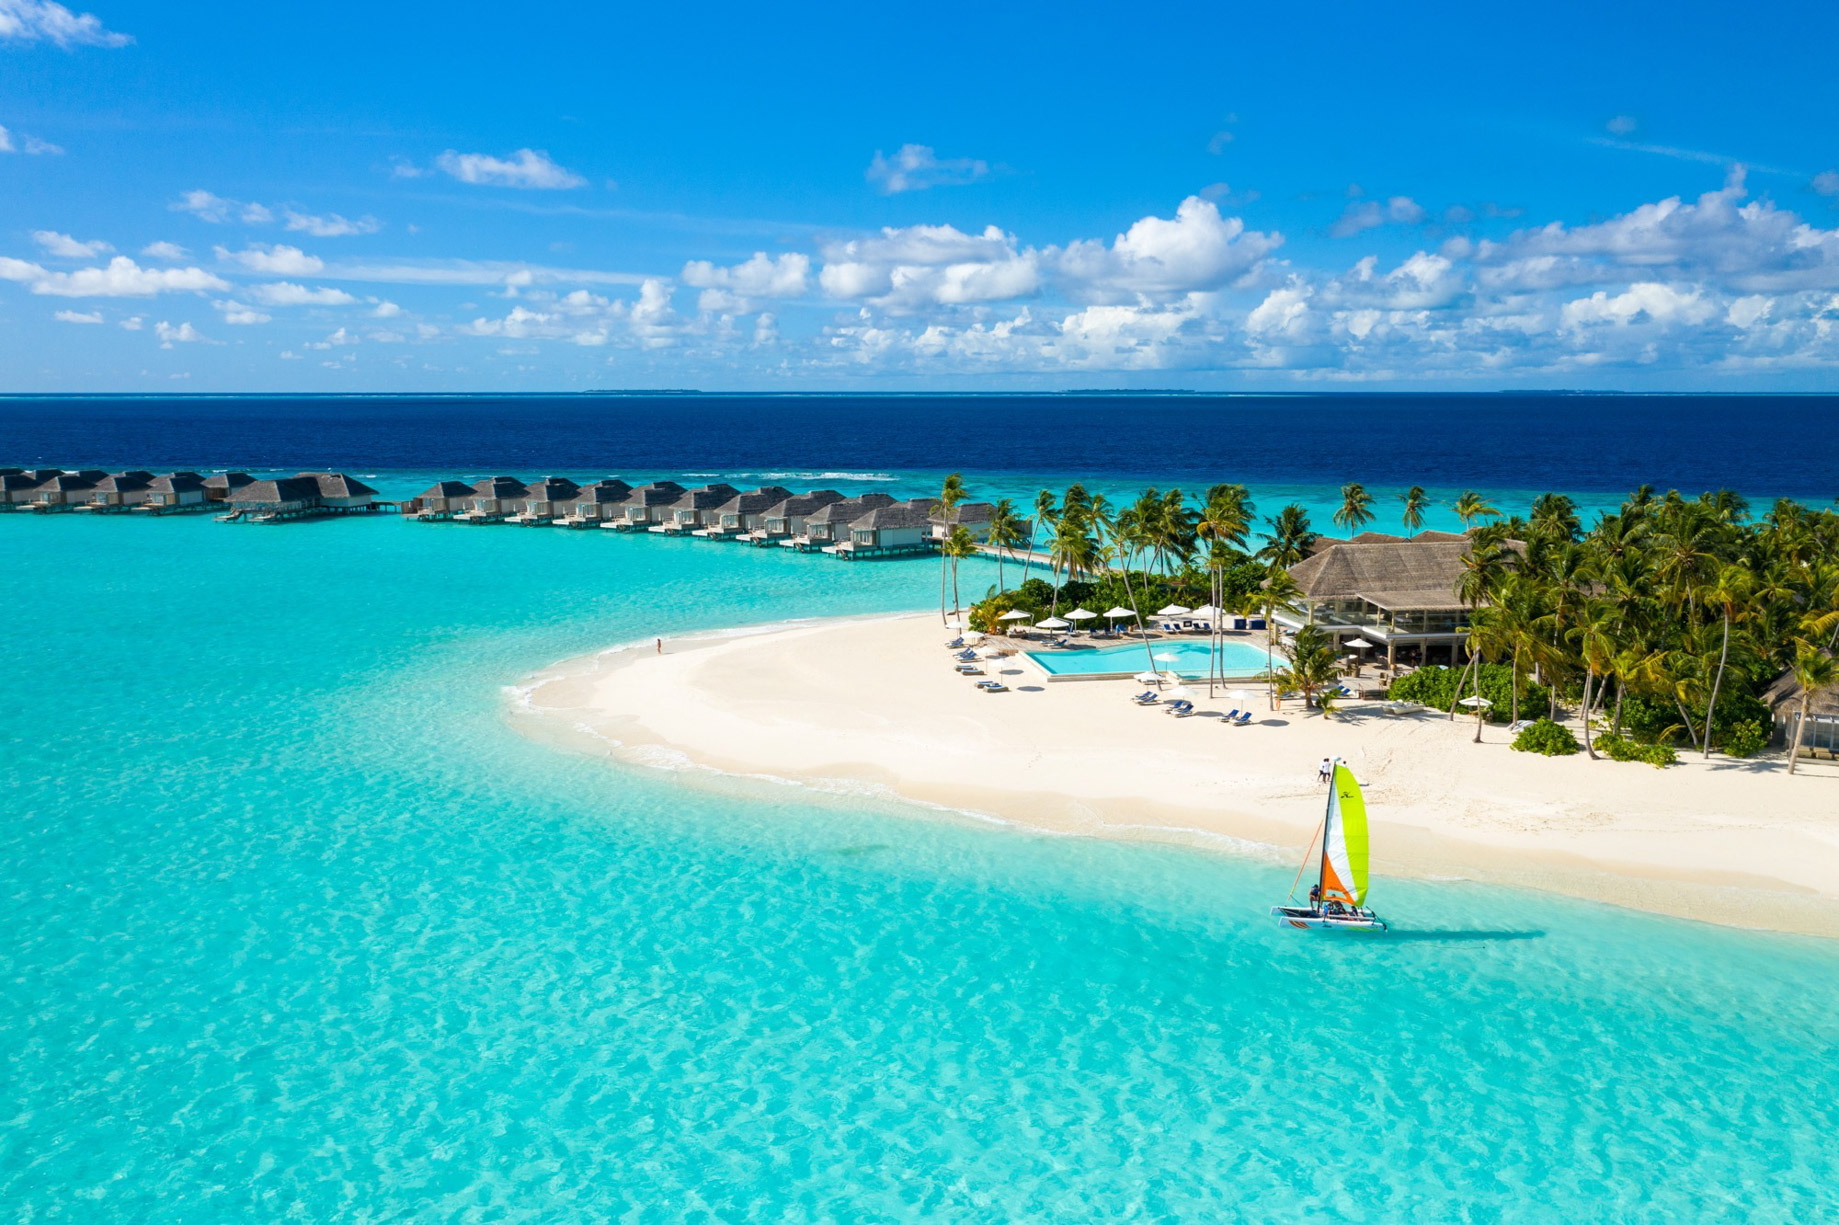 Baglioni Resort Maldives – Maagau Island, Rinbudhoo, Maldives – Sailing